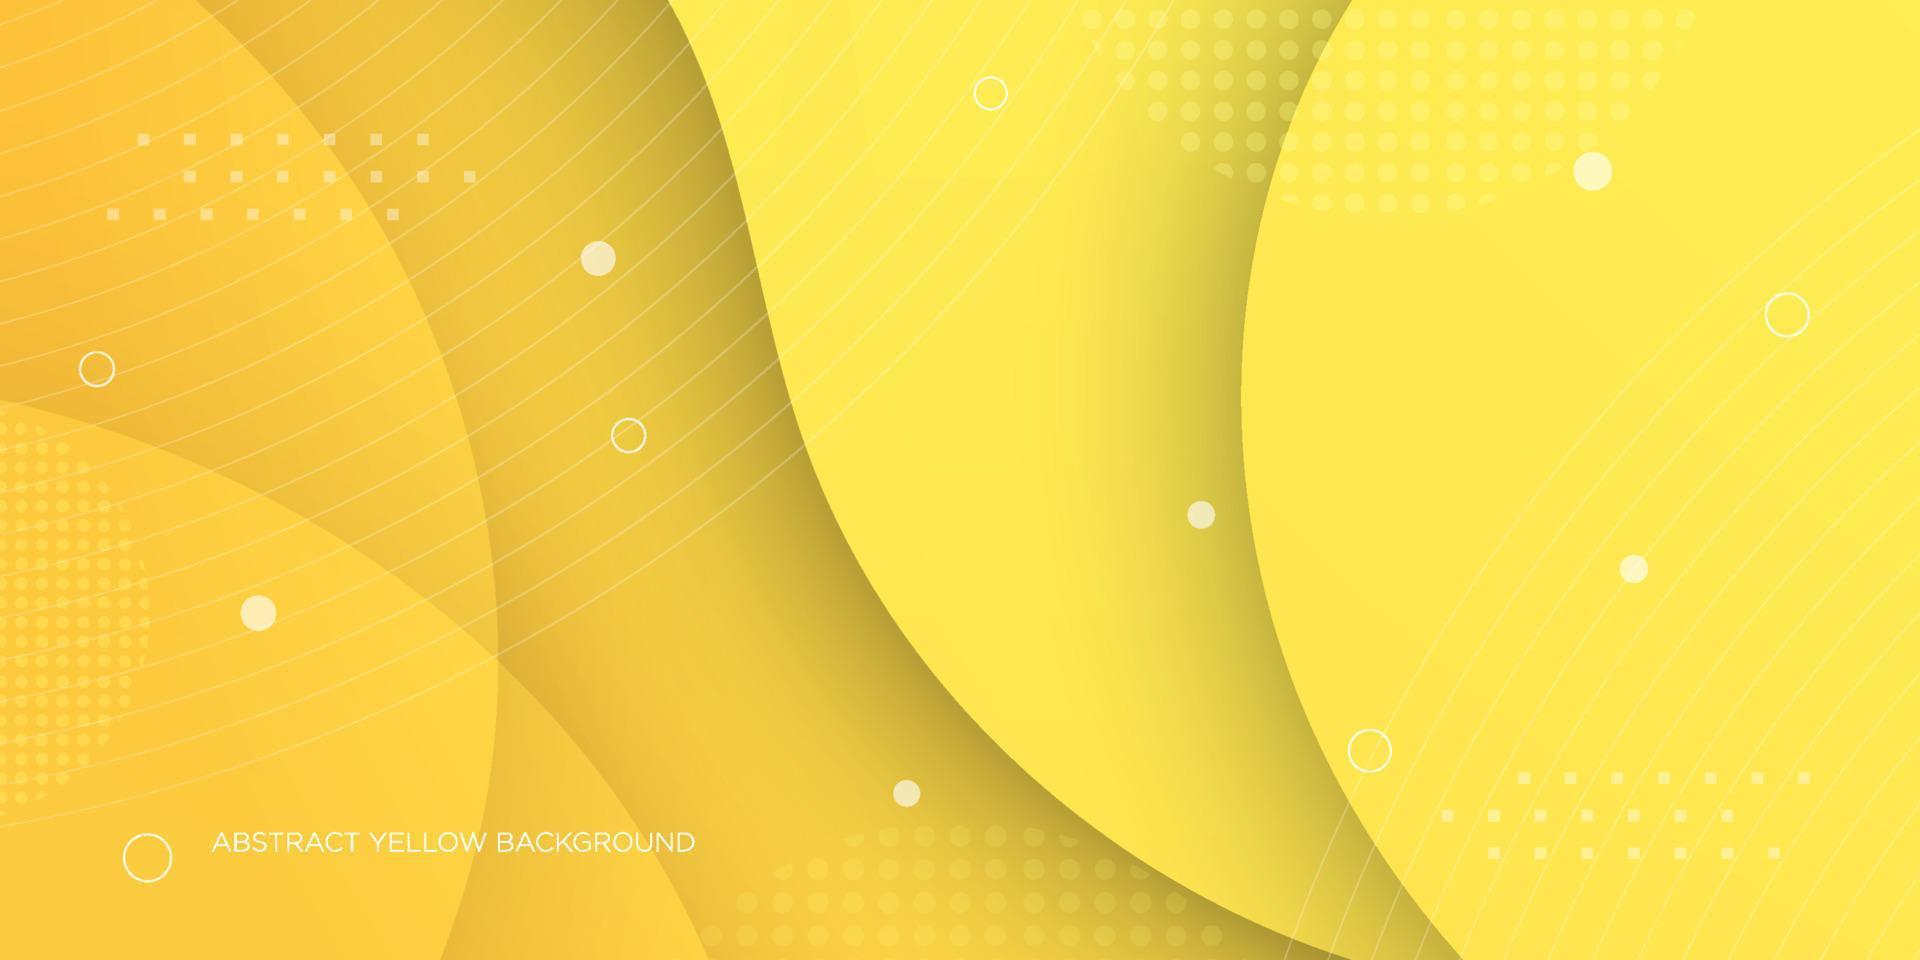 fondo amarillo abstracto con formas fluidas. aspecto 3d con líneas. diseño colorido concepto luminoso y moderno. eps10 vector